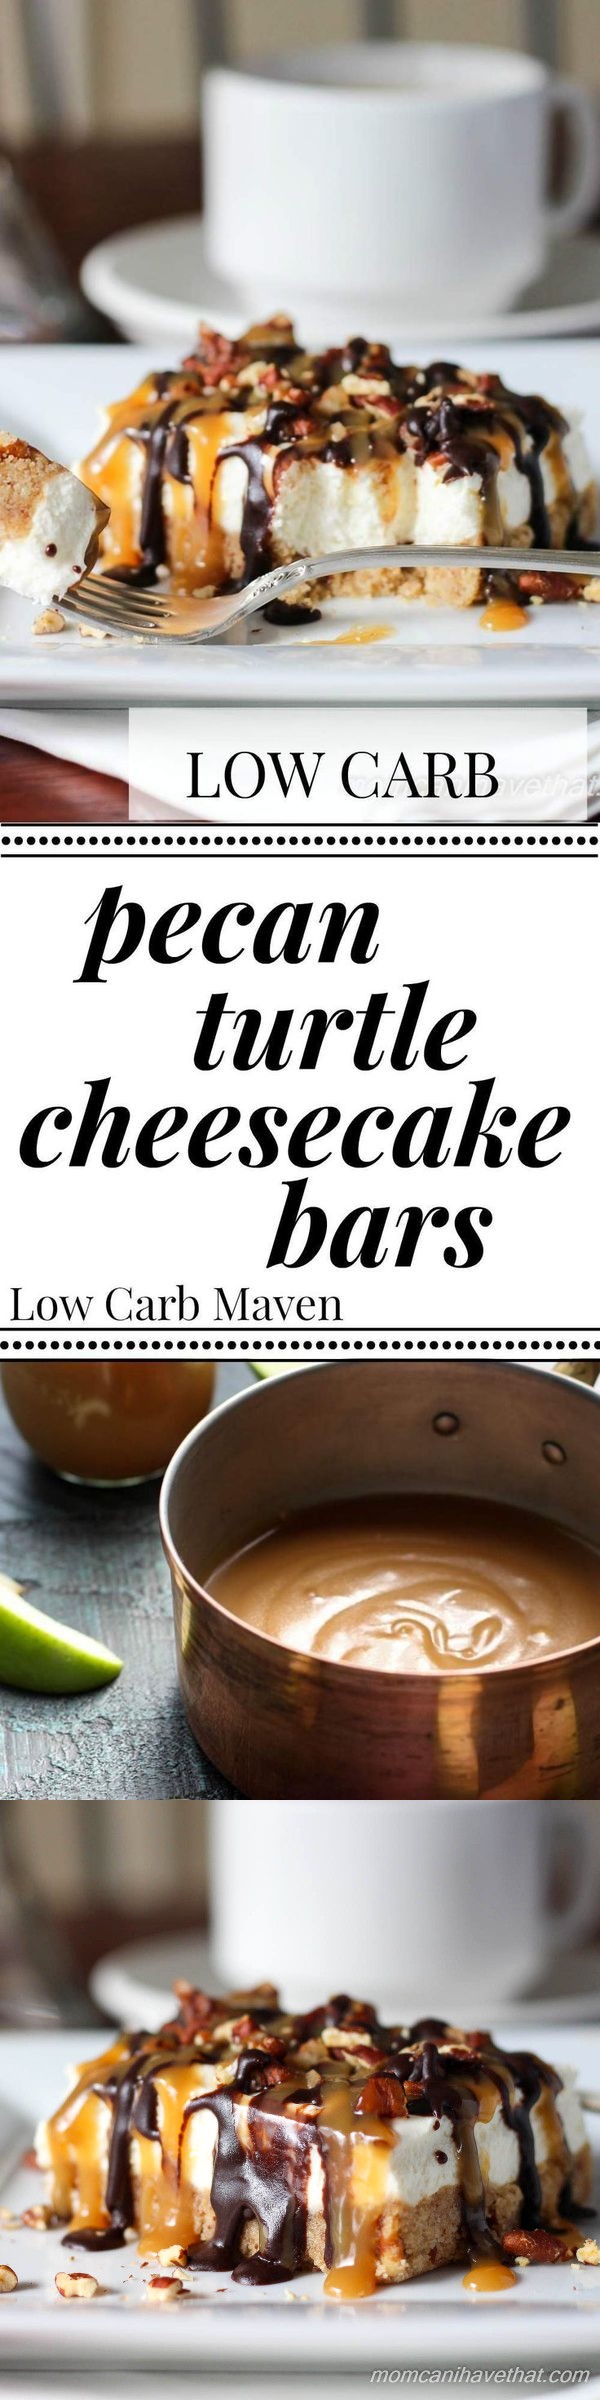 Pecan Turtle Cheesecake Bars